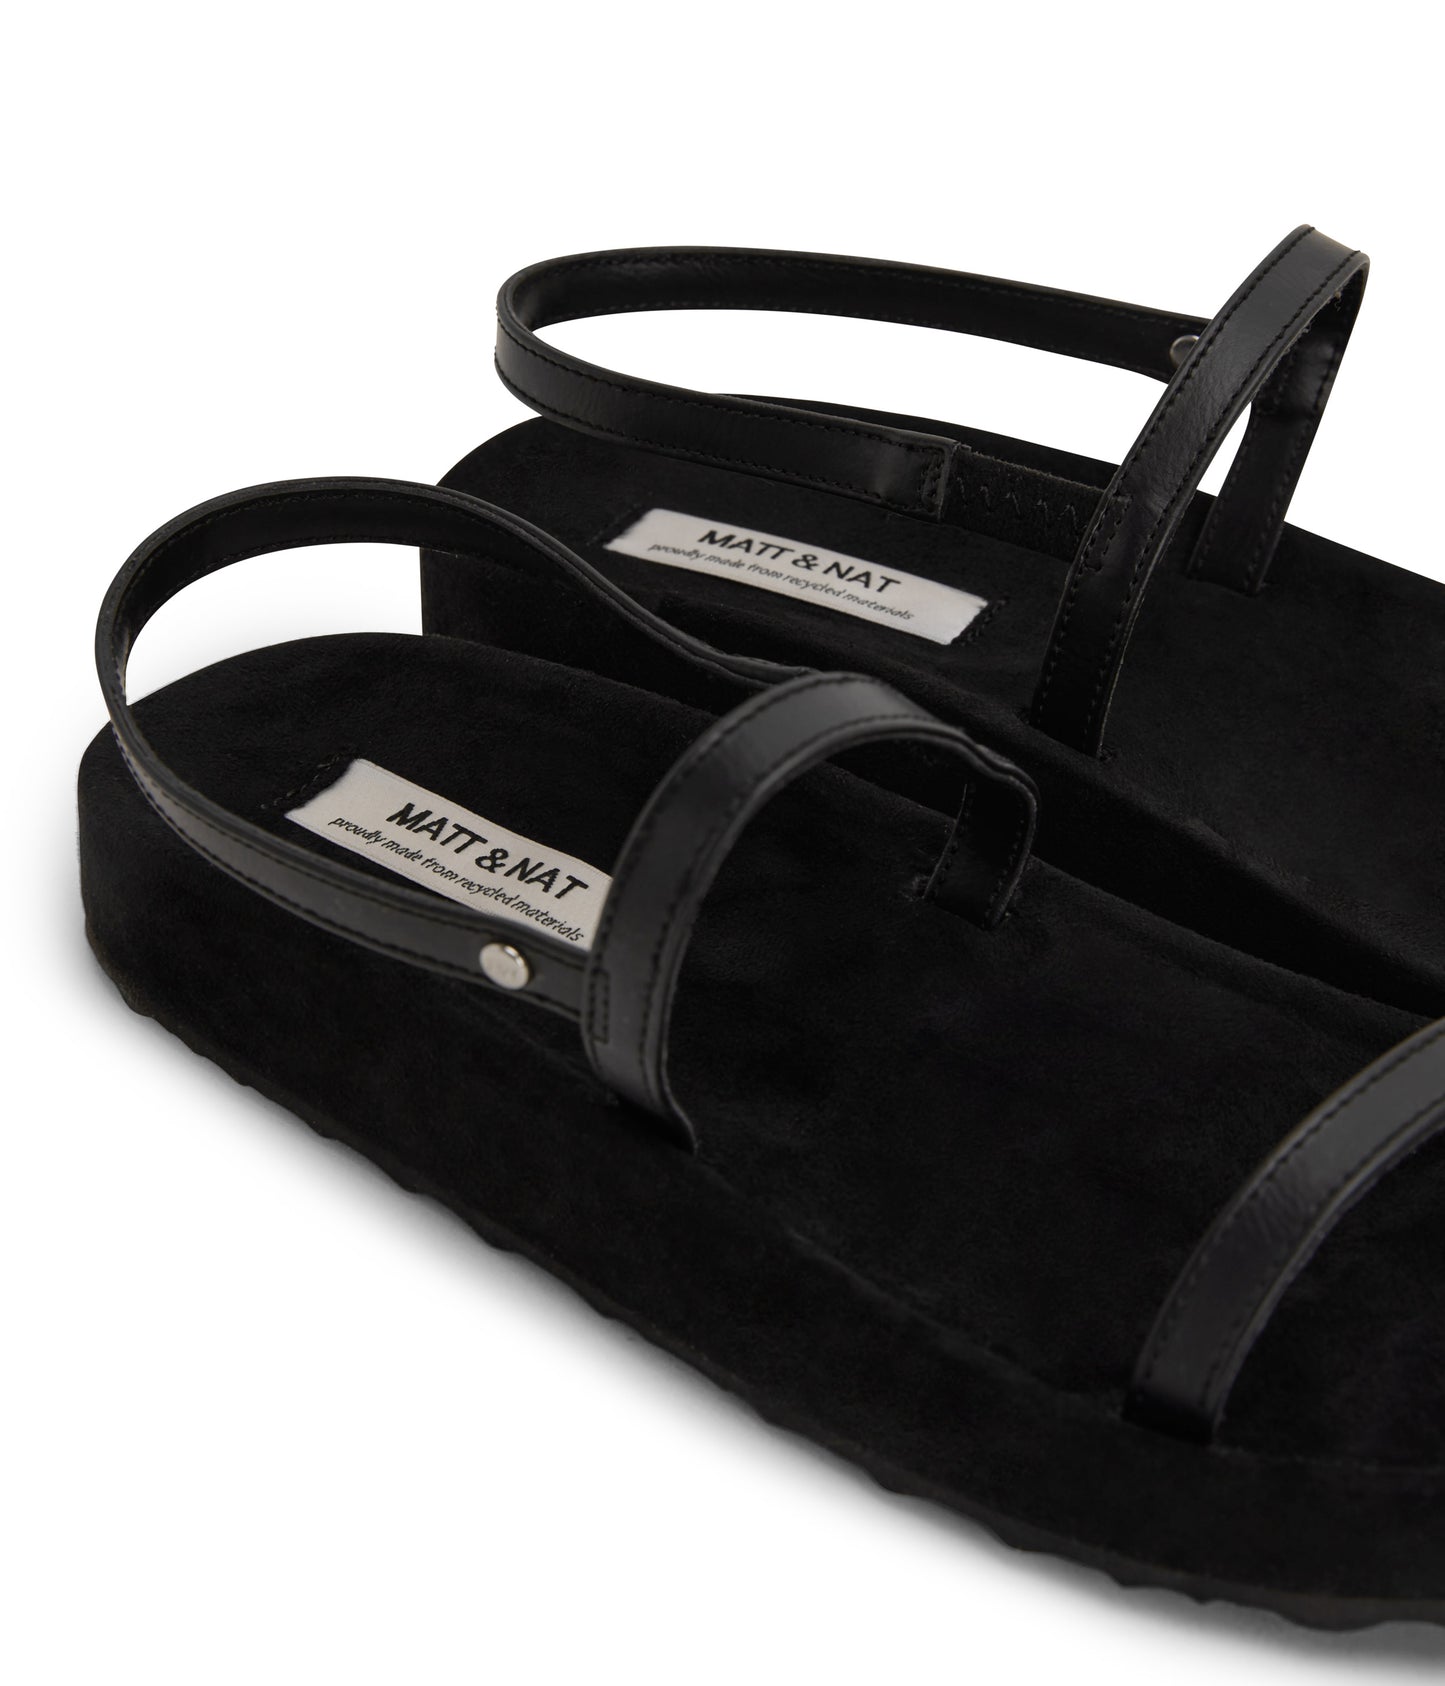 MAHER Women's Vegan Slip On Sandals | Color: Black - variant::black